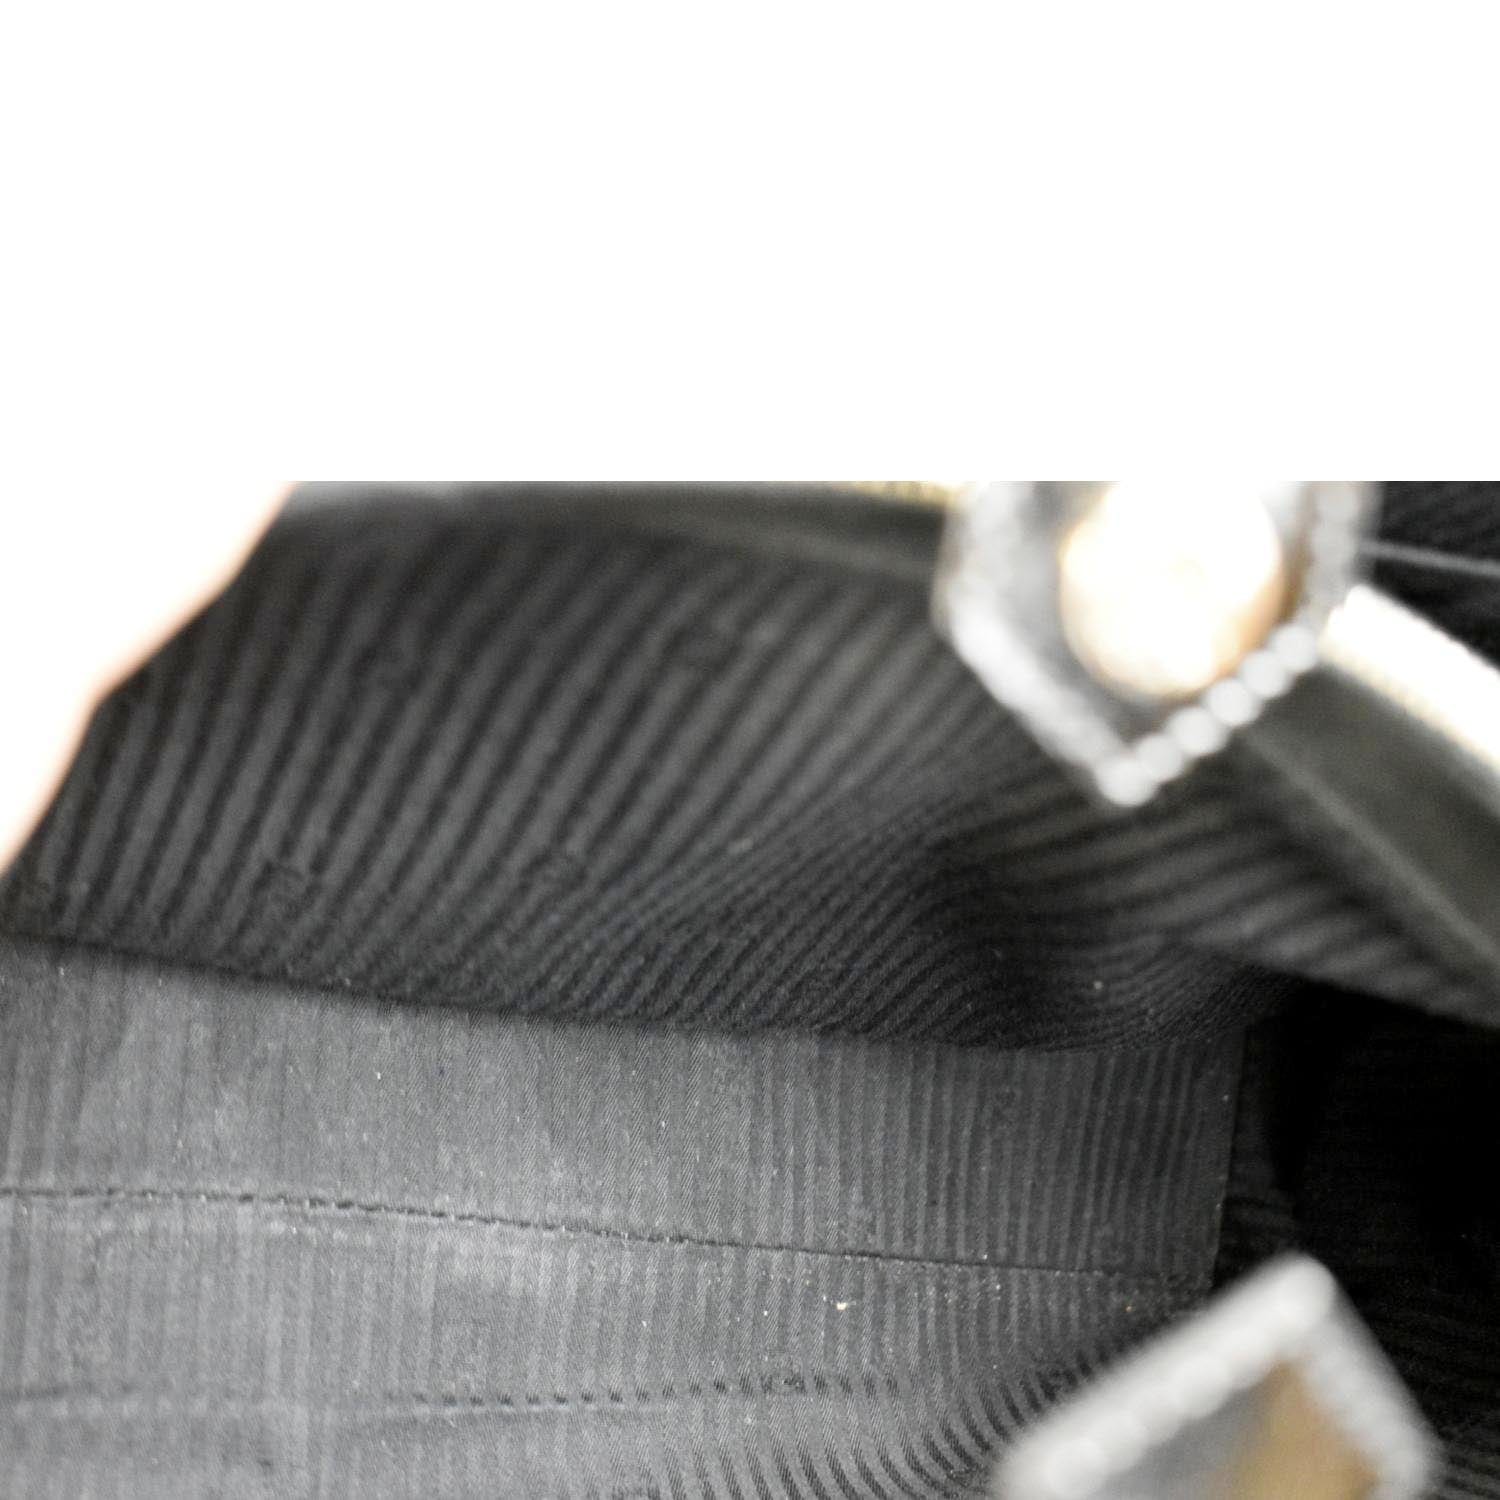 FENDI Black Patent Leather De Jour Tote Item#13526 – ALL YOUR BLISS